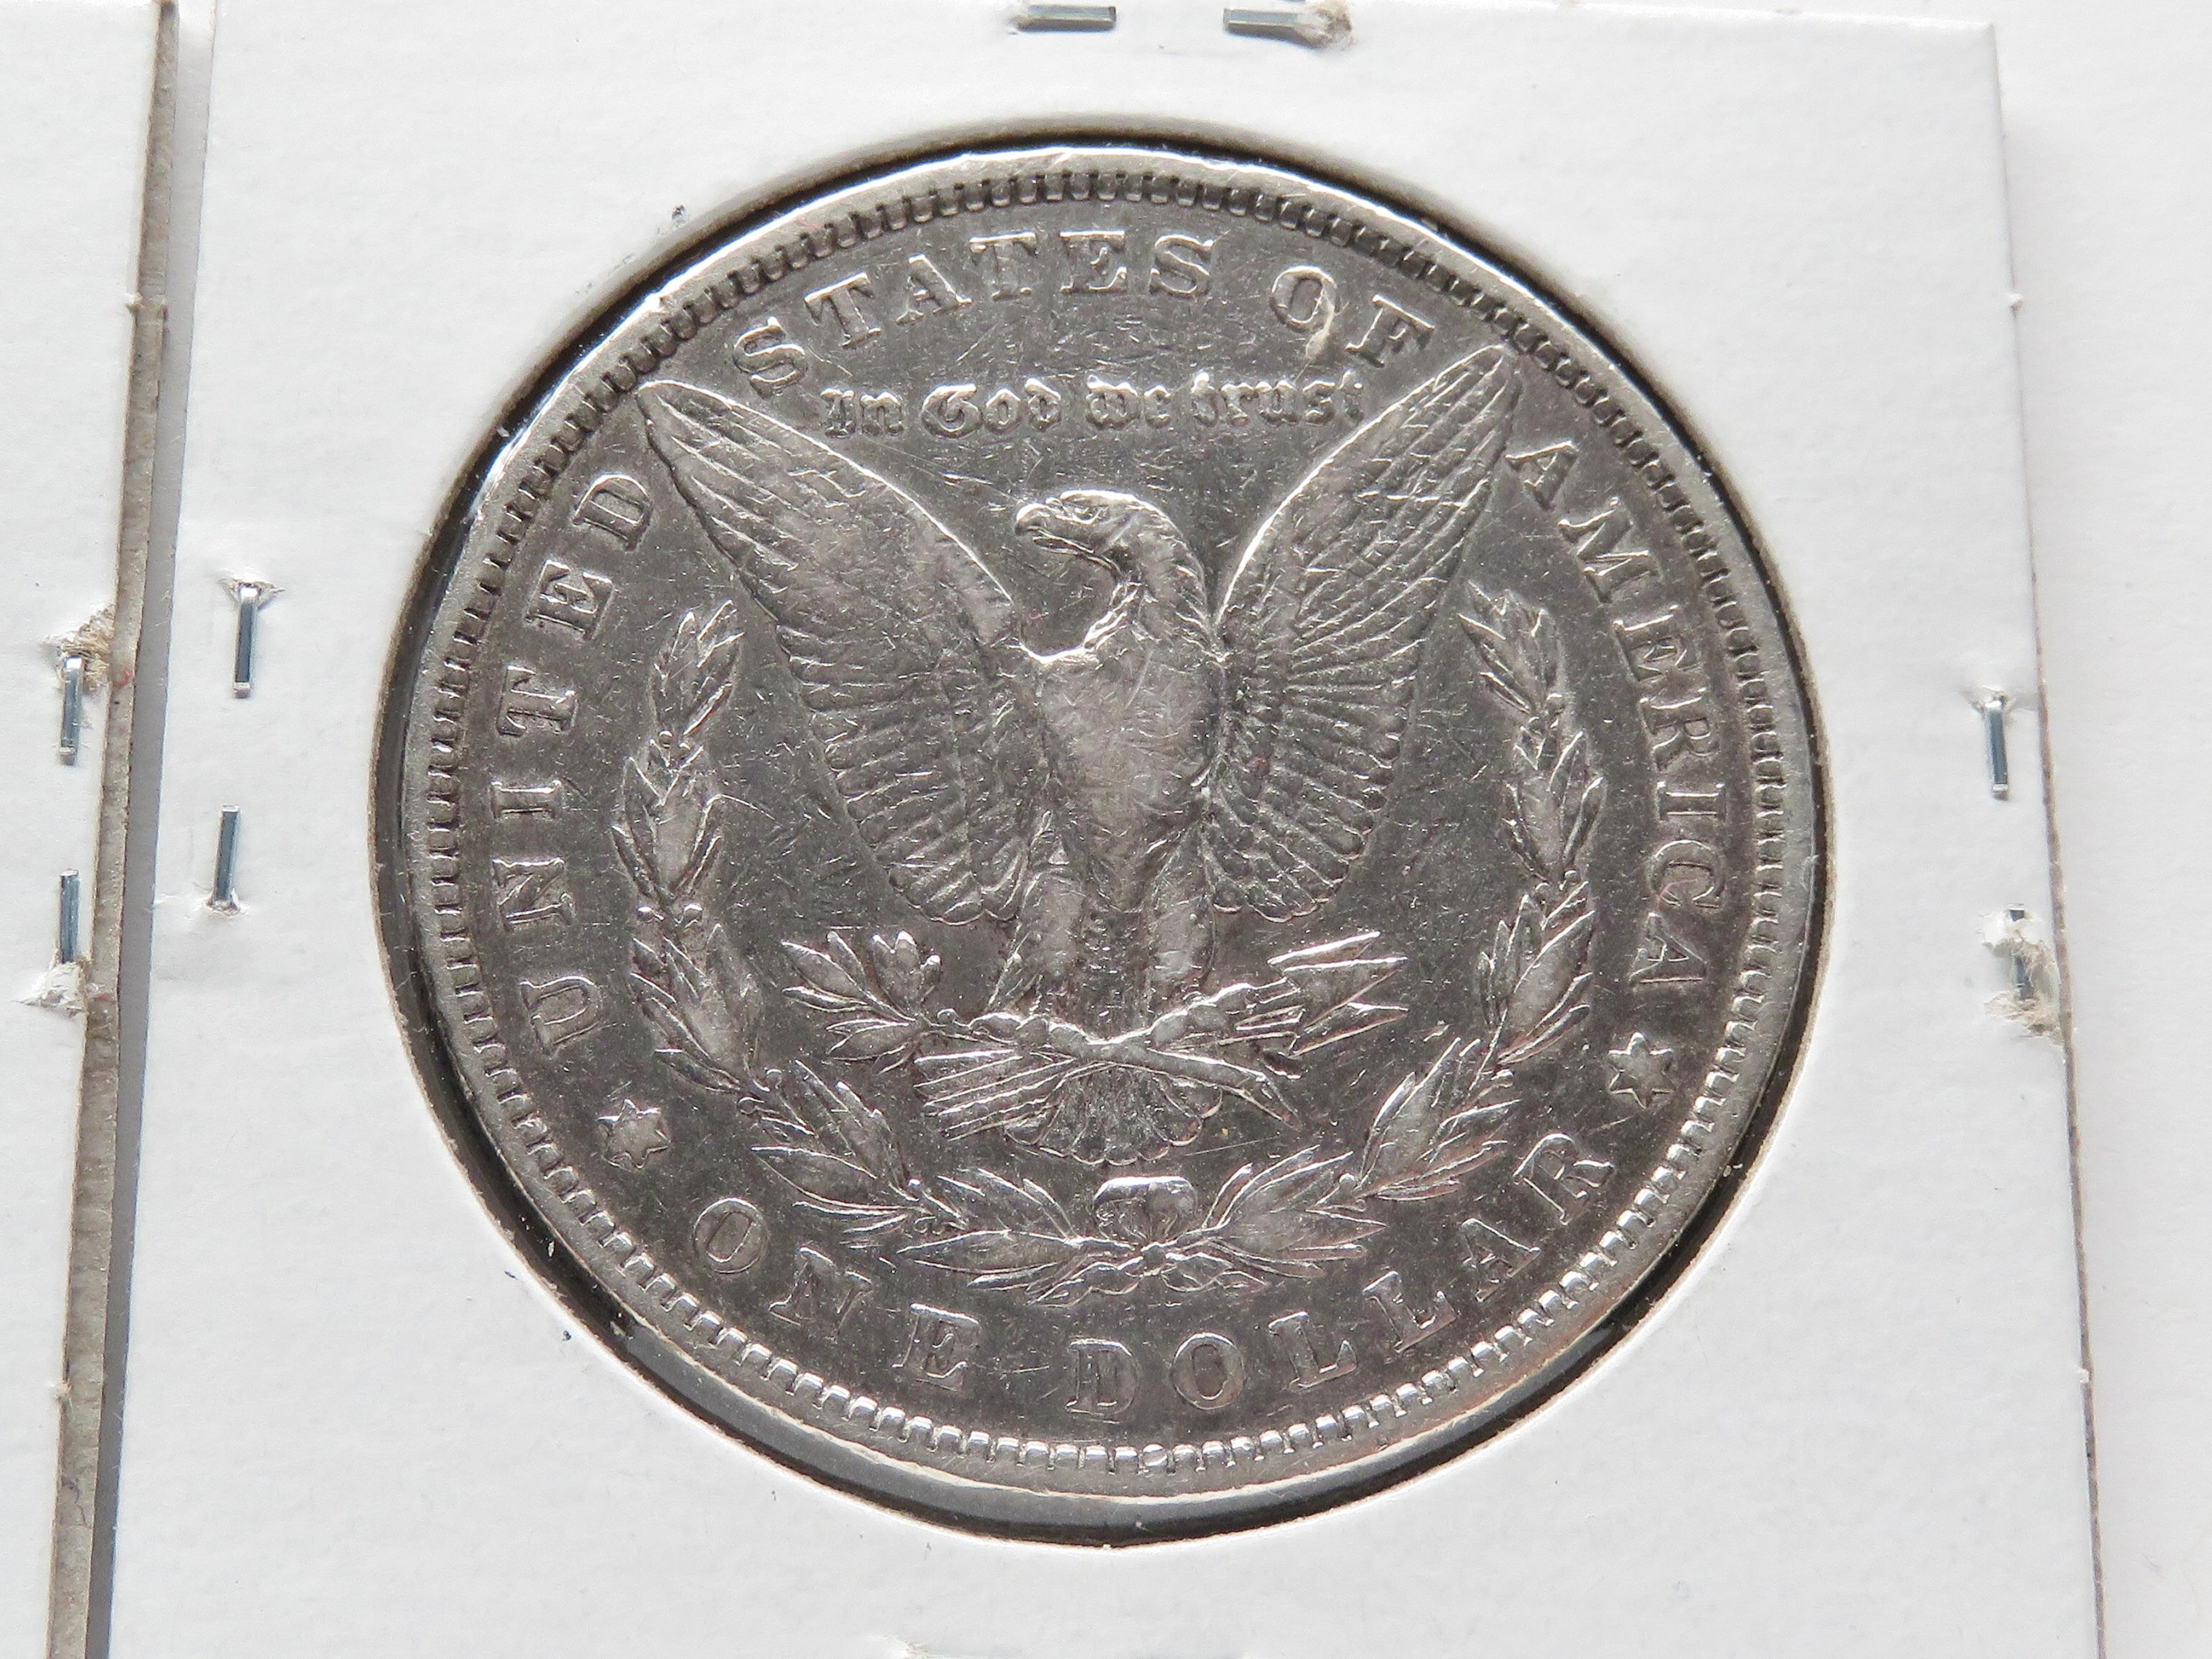 3 Morgan $: 1881 VG, 1882-O VG, 1883 F details problems